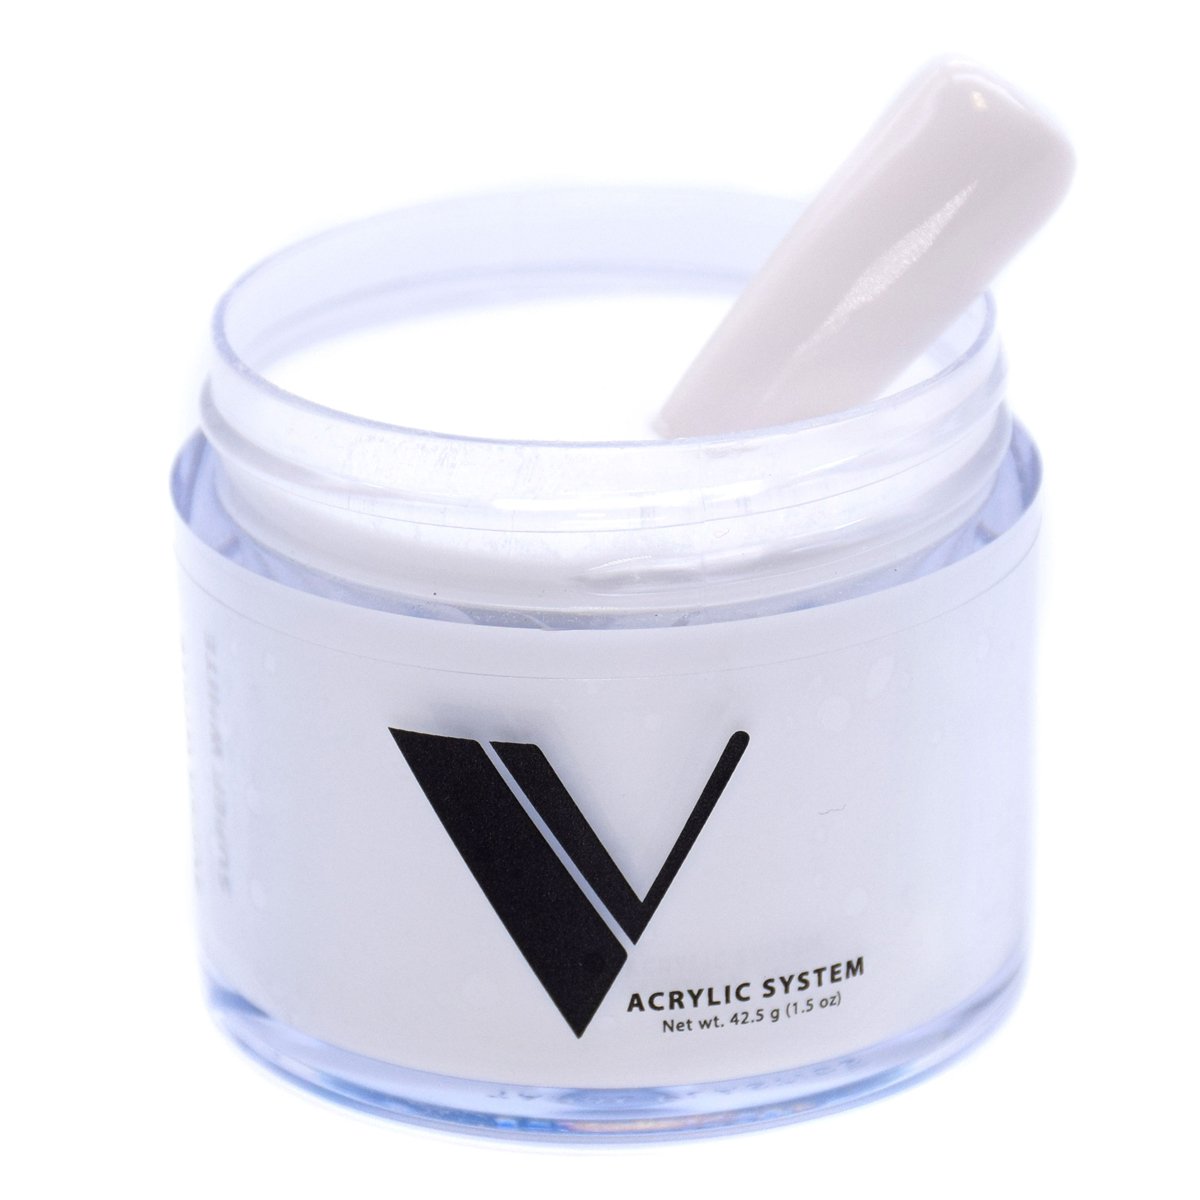 Acrylic Powder - Acrylic System by Valentino Beauty Pure - Super White